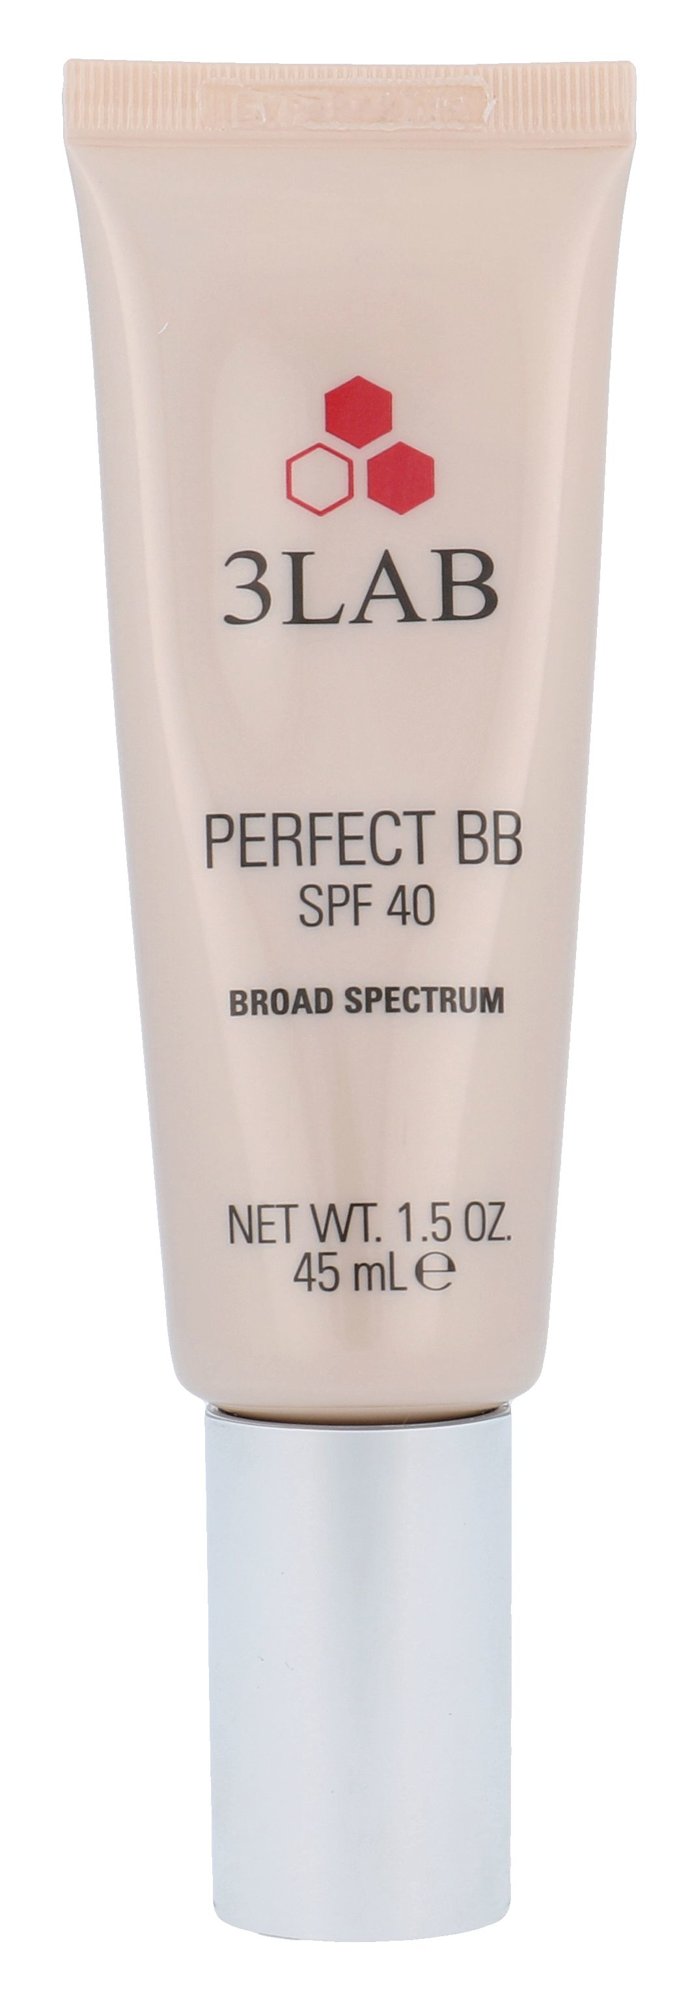 3LAB Perfect BB SPF40 Broad Spectrum